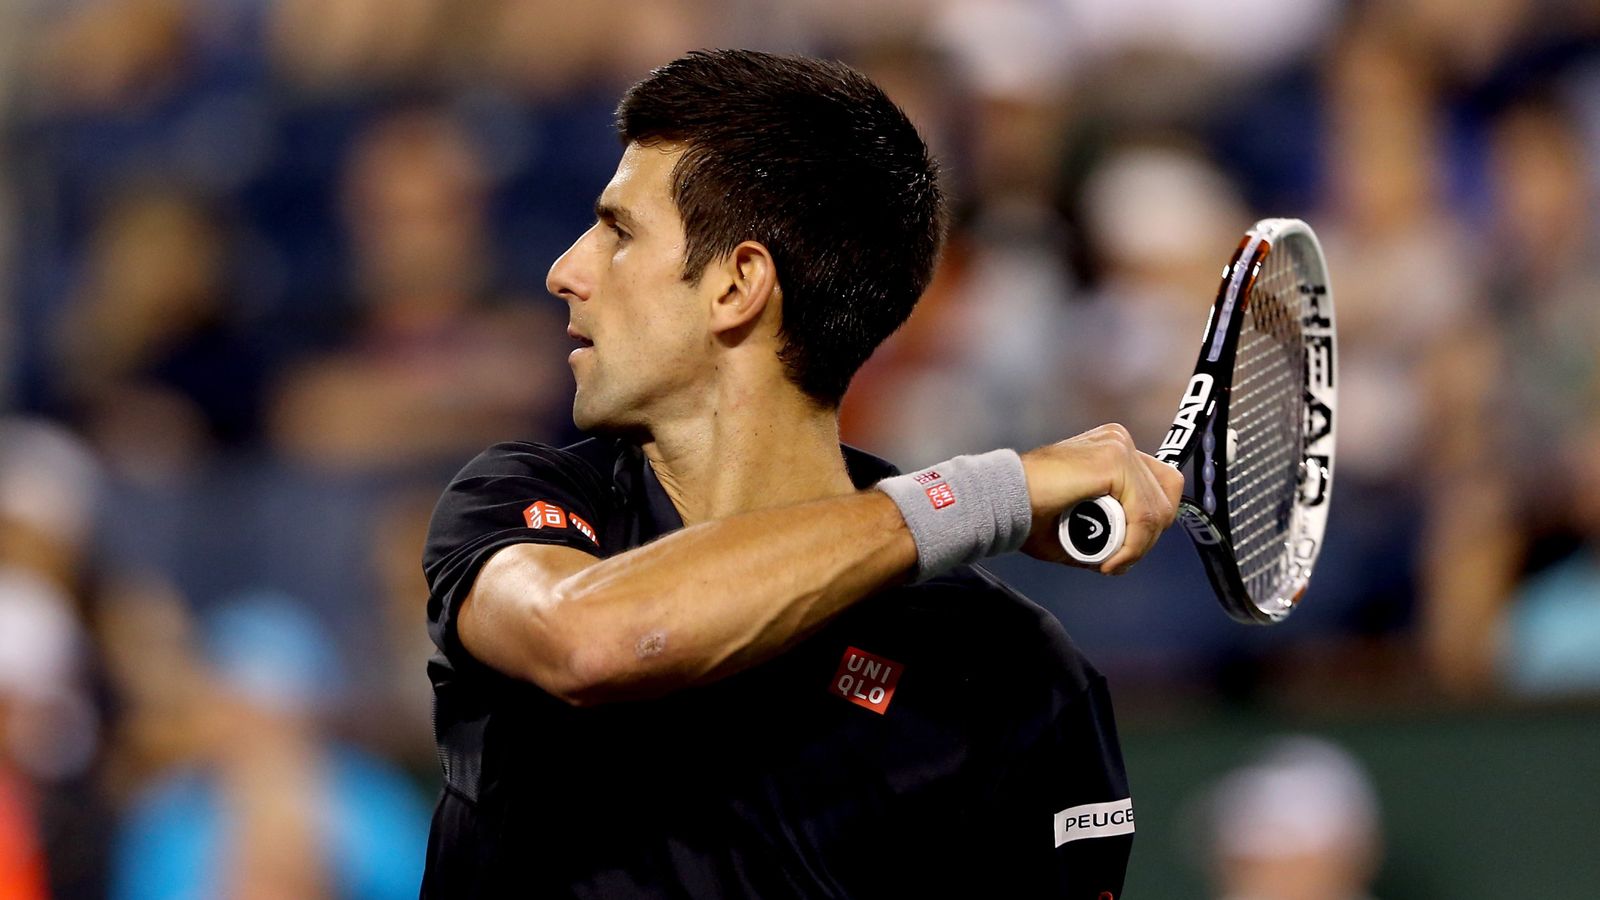 BNP Paribas Open Second seed Novak Djokovic made to work hard Tennis